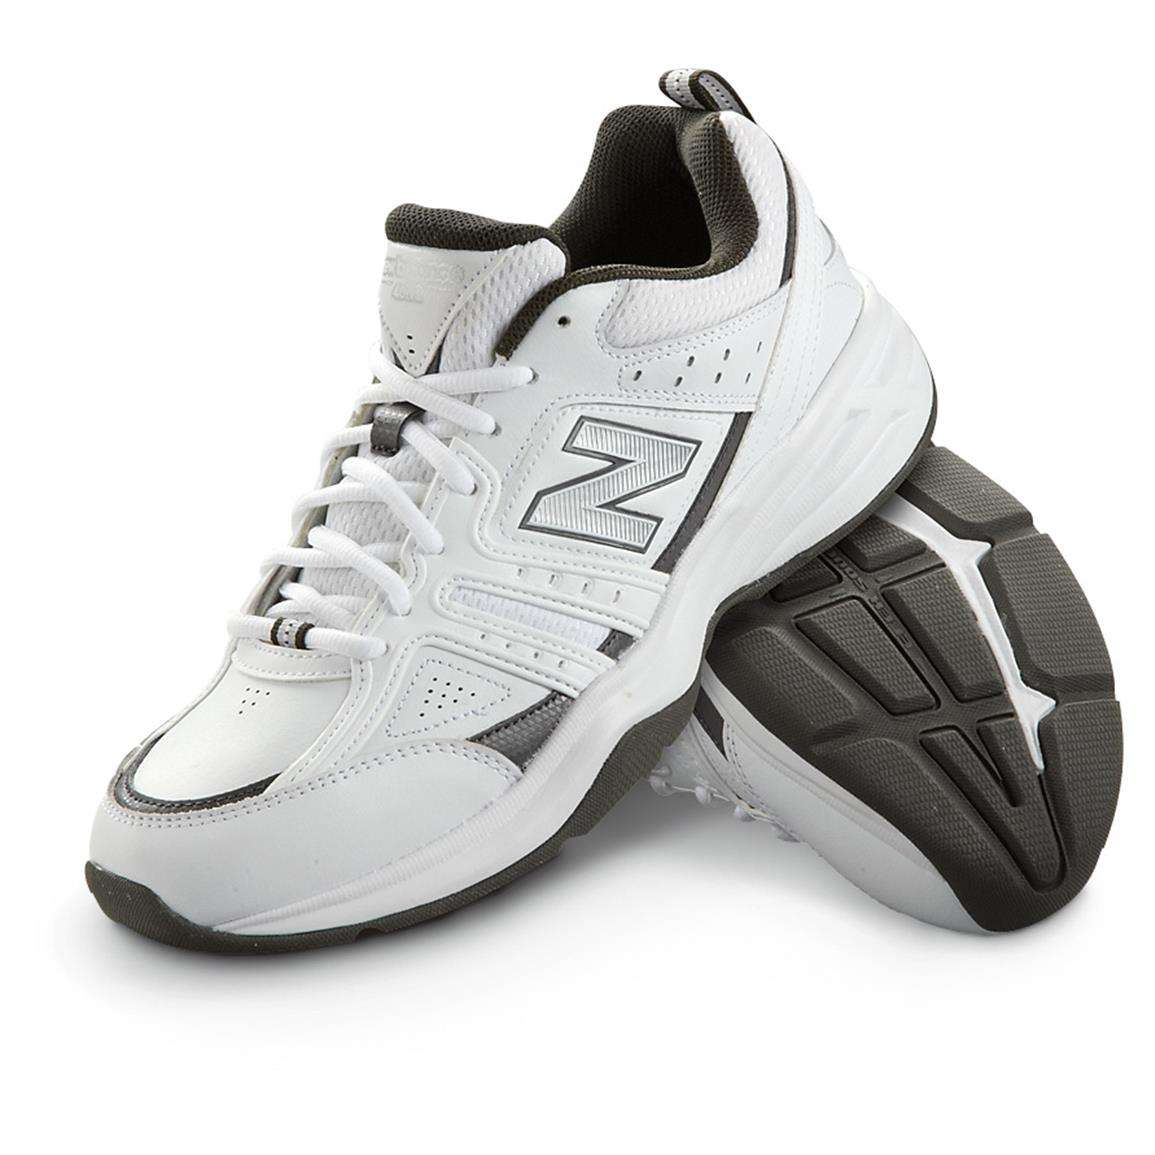 New Balance 401v2 Running Shoes